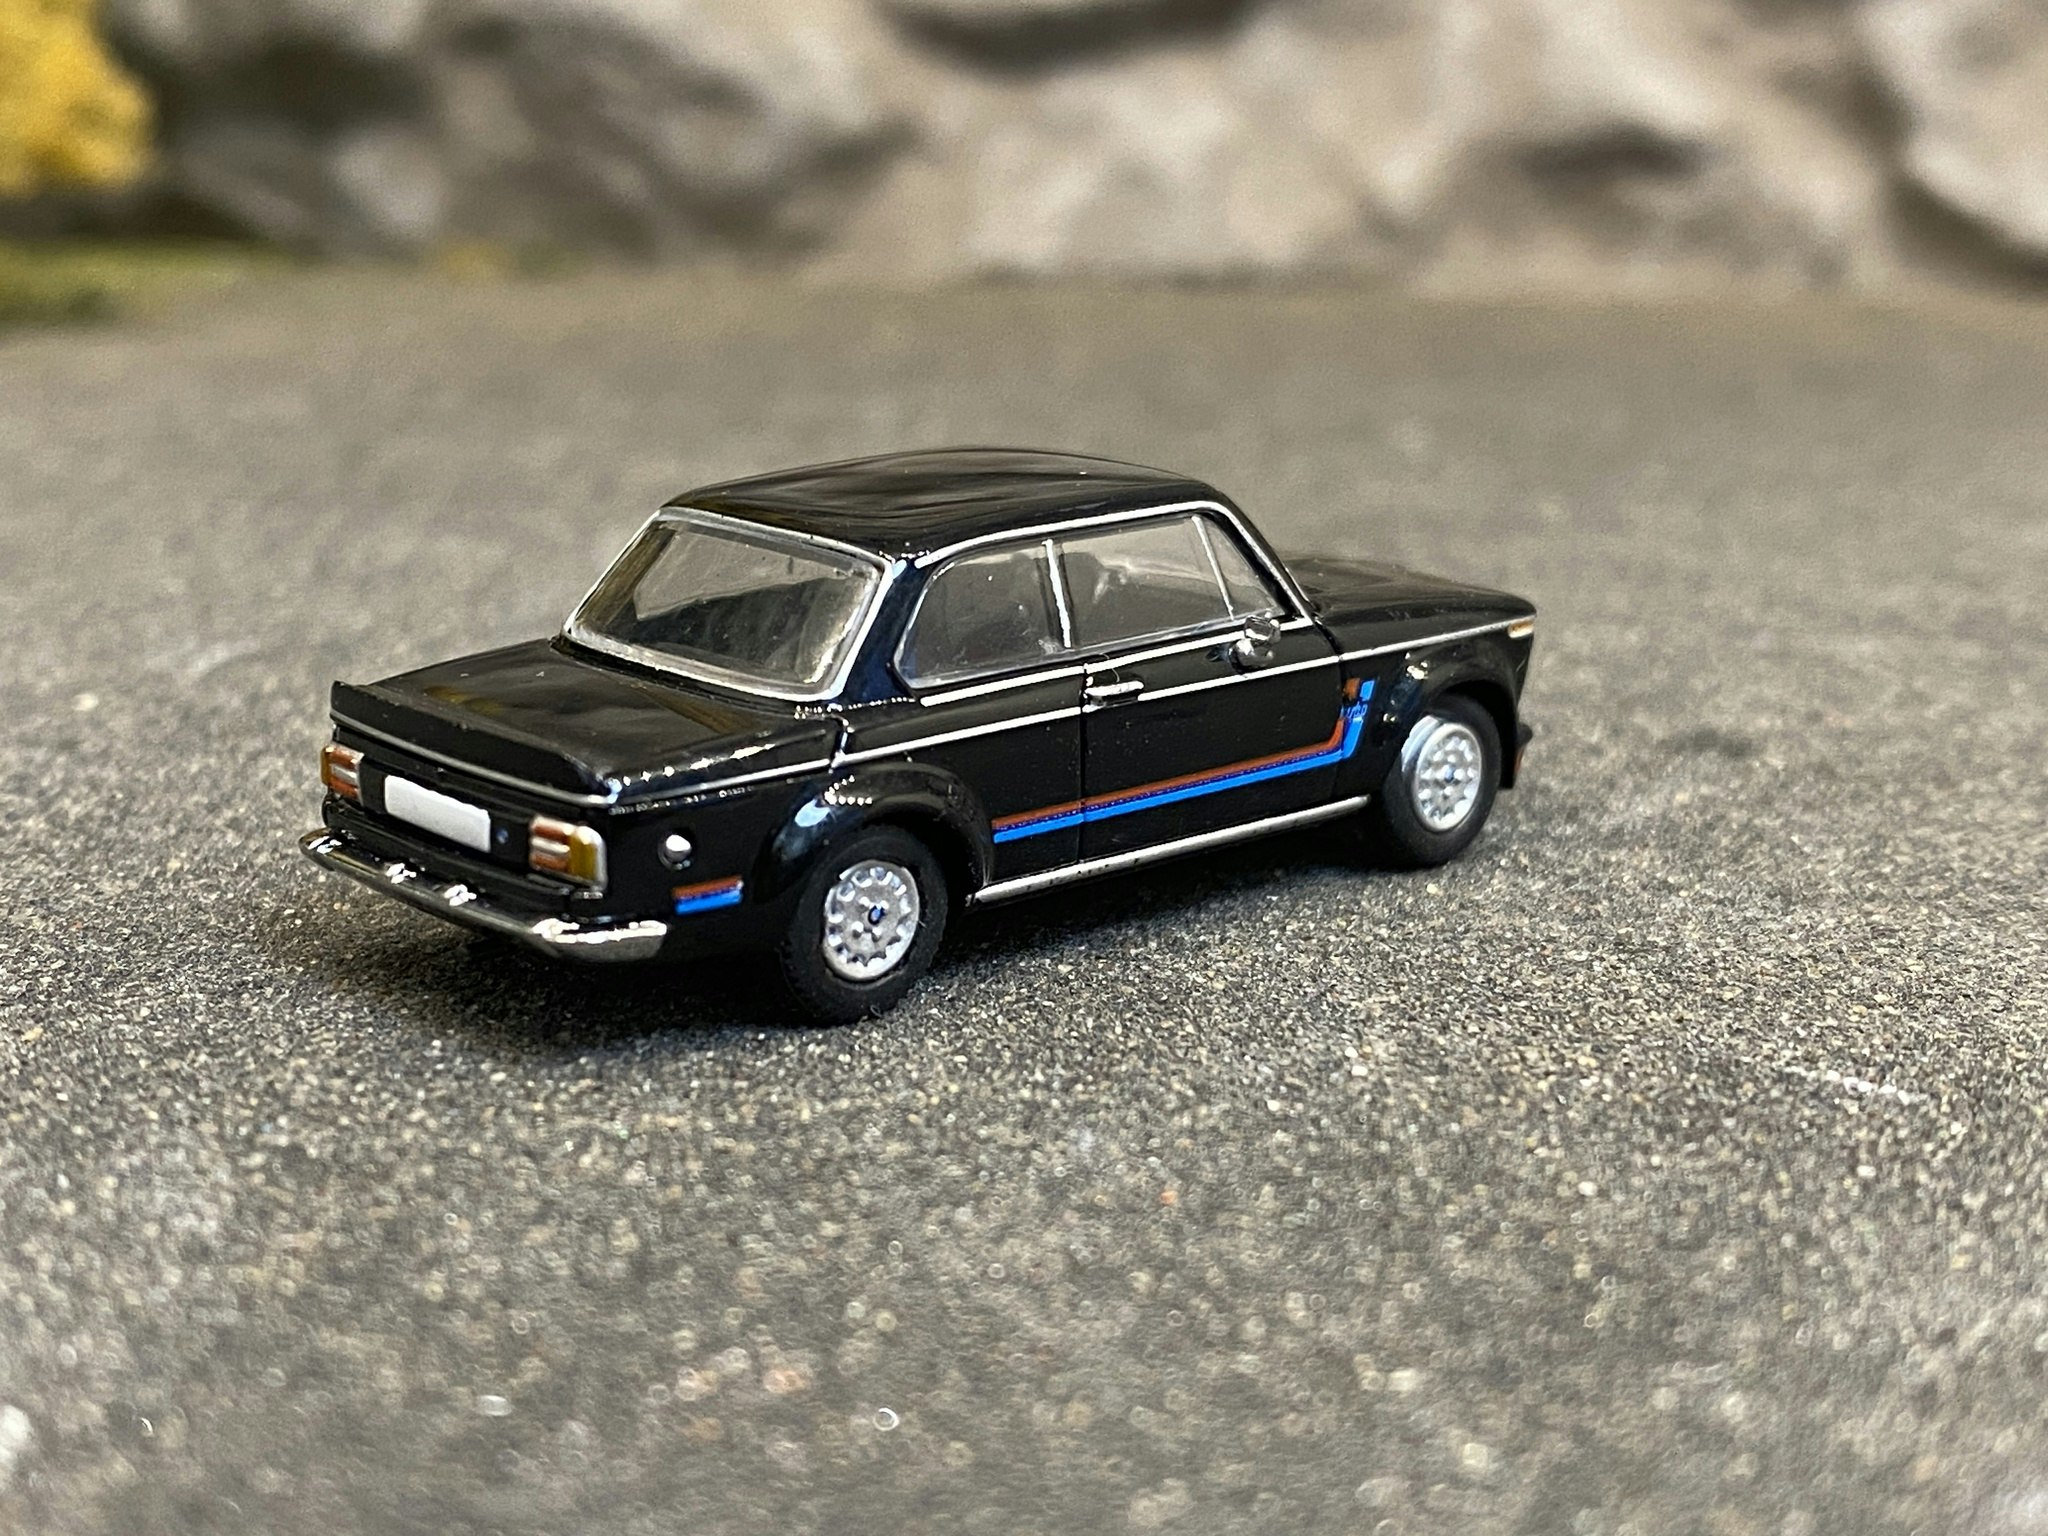 Skala 1/87 - BMW 2002 Turbo, black/Decorated, 1973 fr PCX87